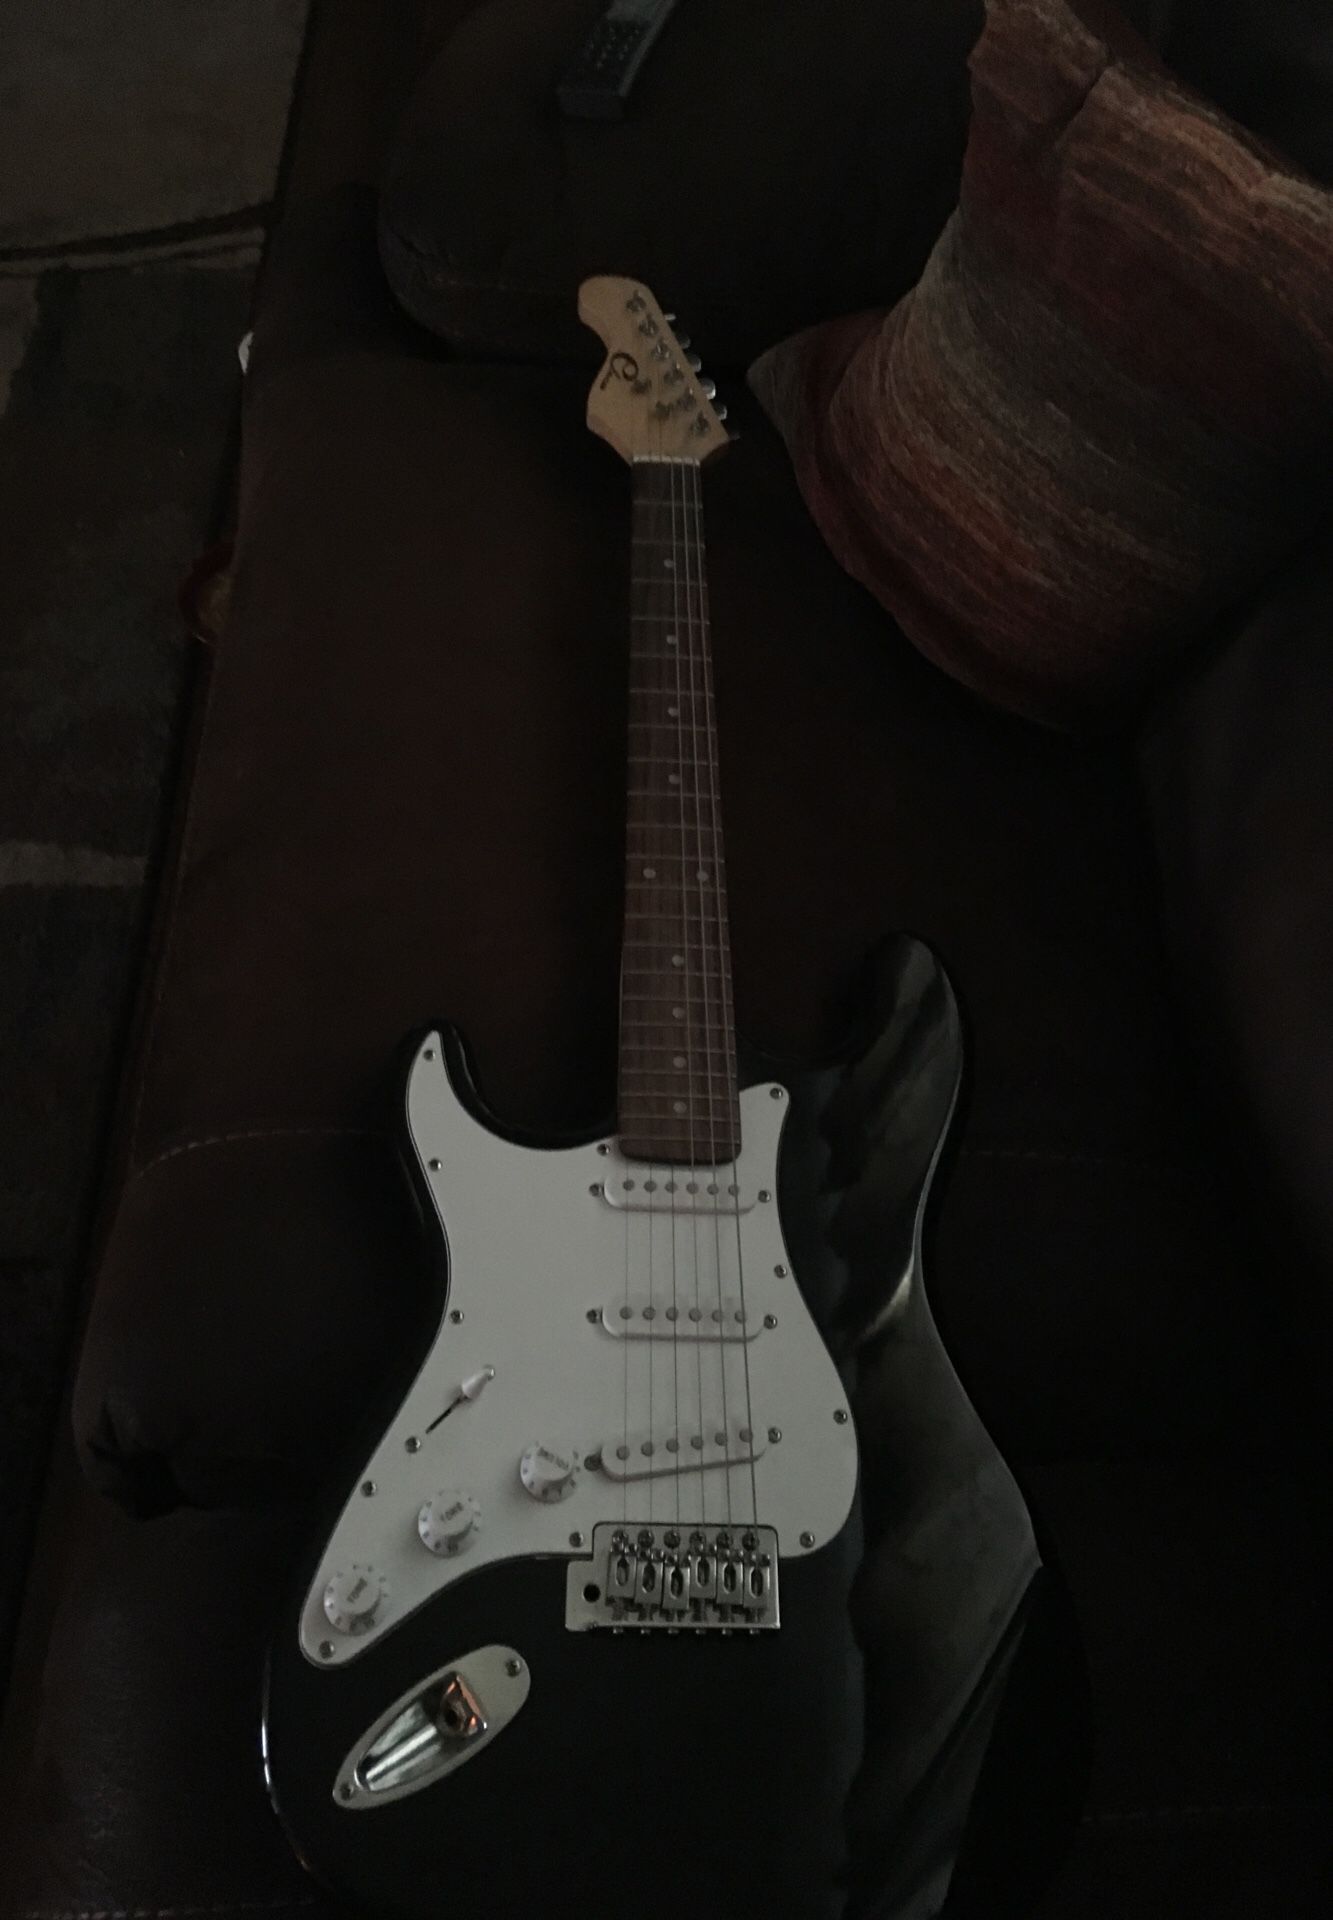 Eleca Left Handed Guitar. Used twice.